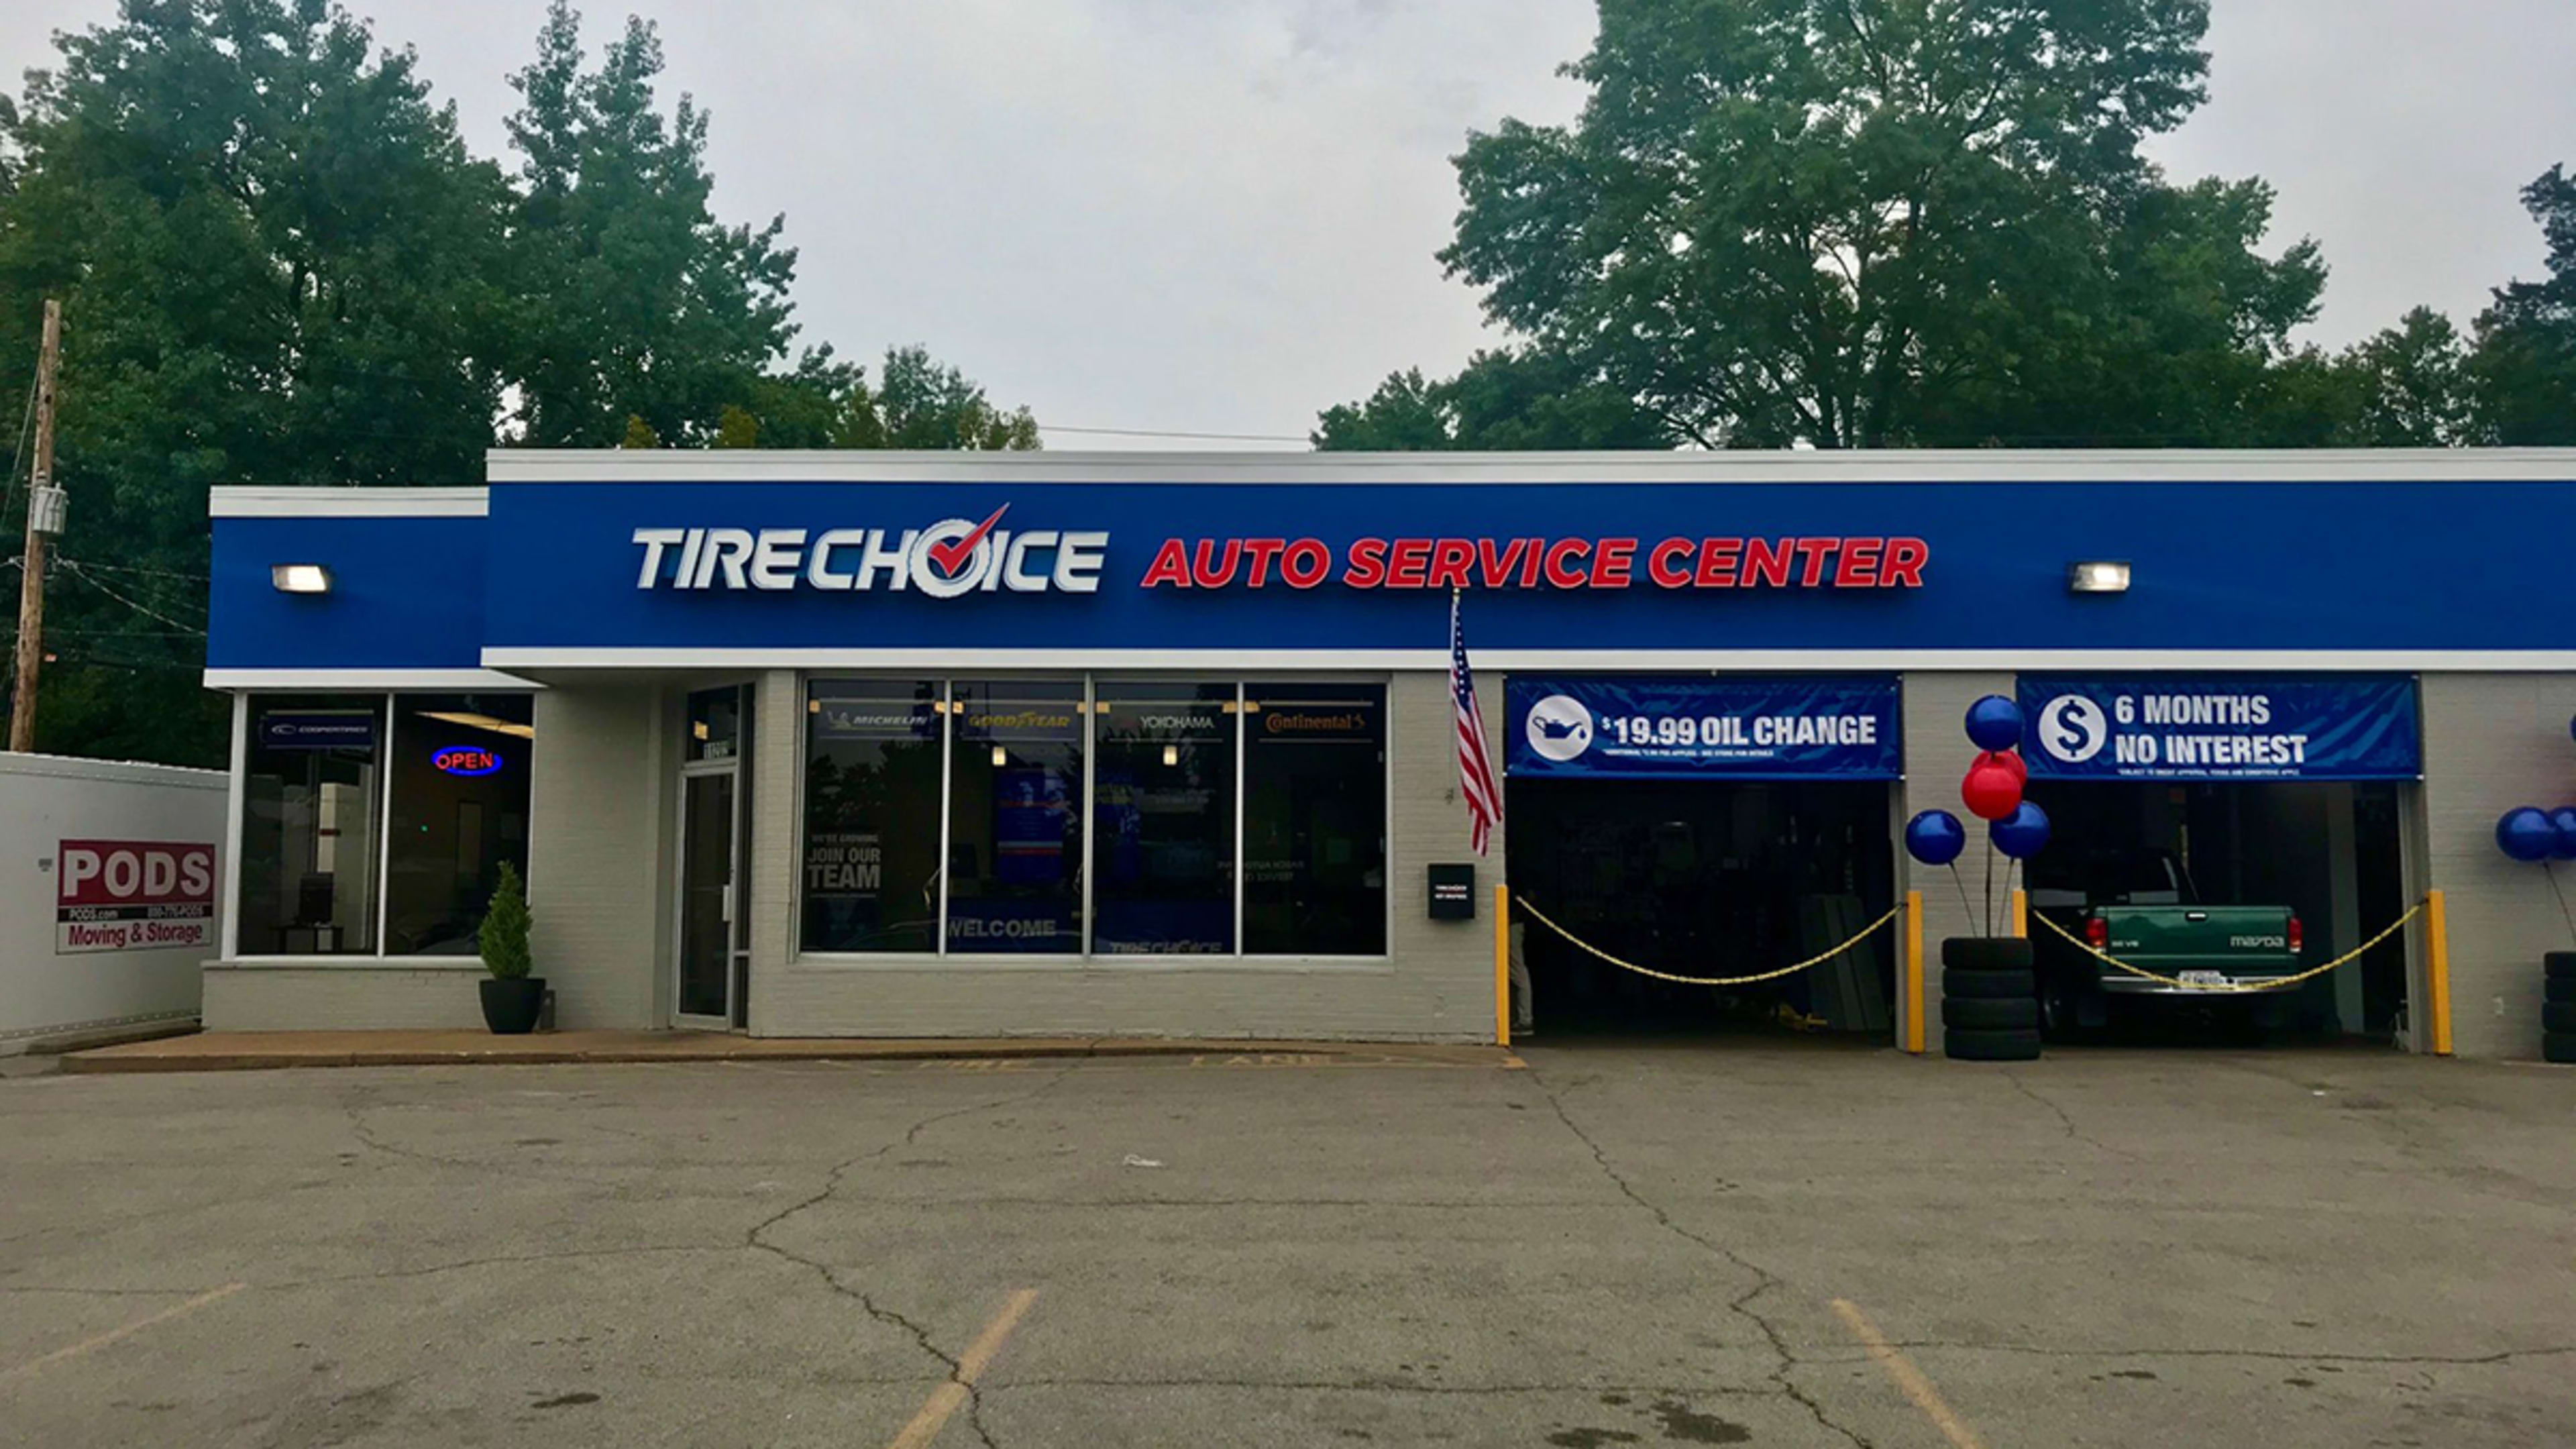 Tire Choice Auto Service Centers in Saint Louis, MO (11202 Manchester Rd):  Tire Shop Near me